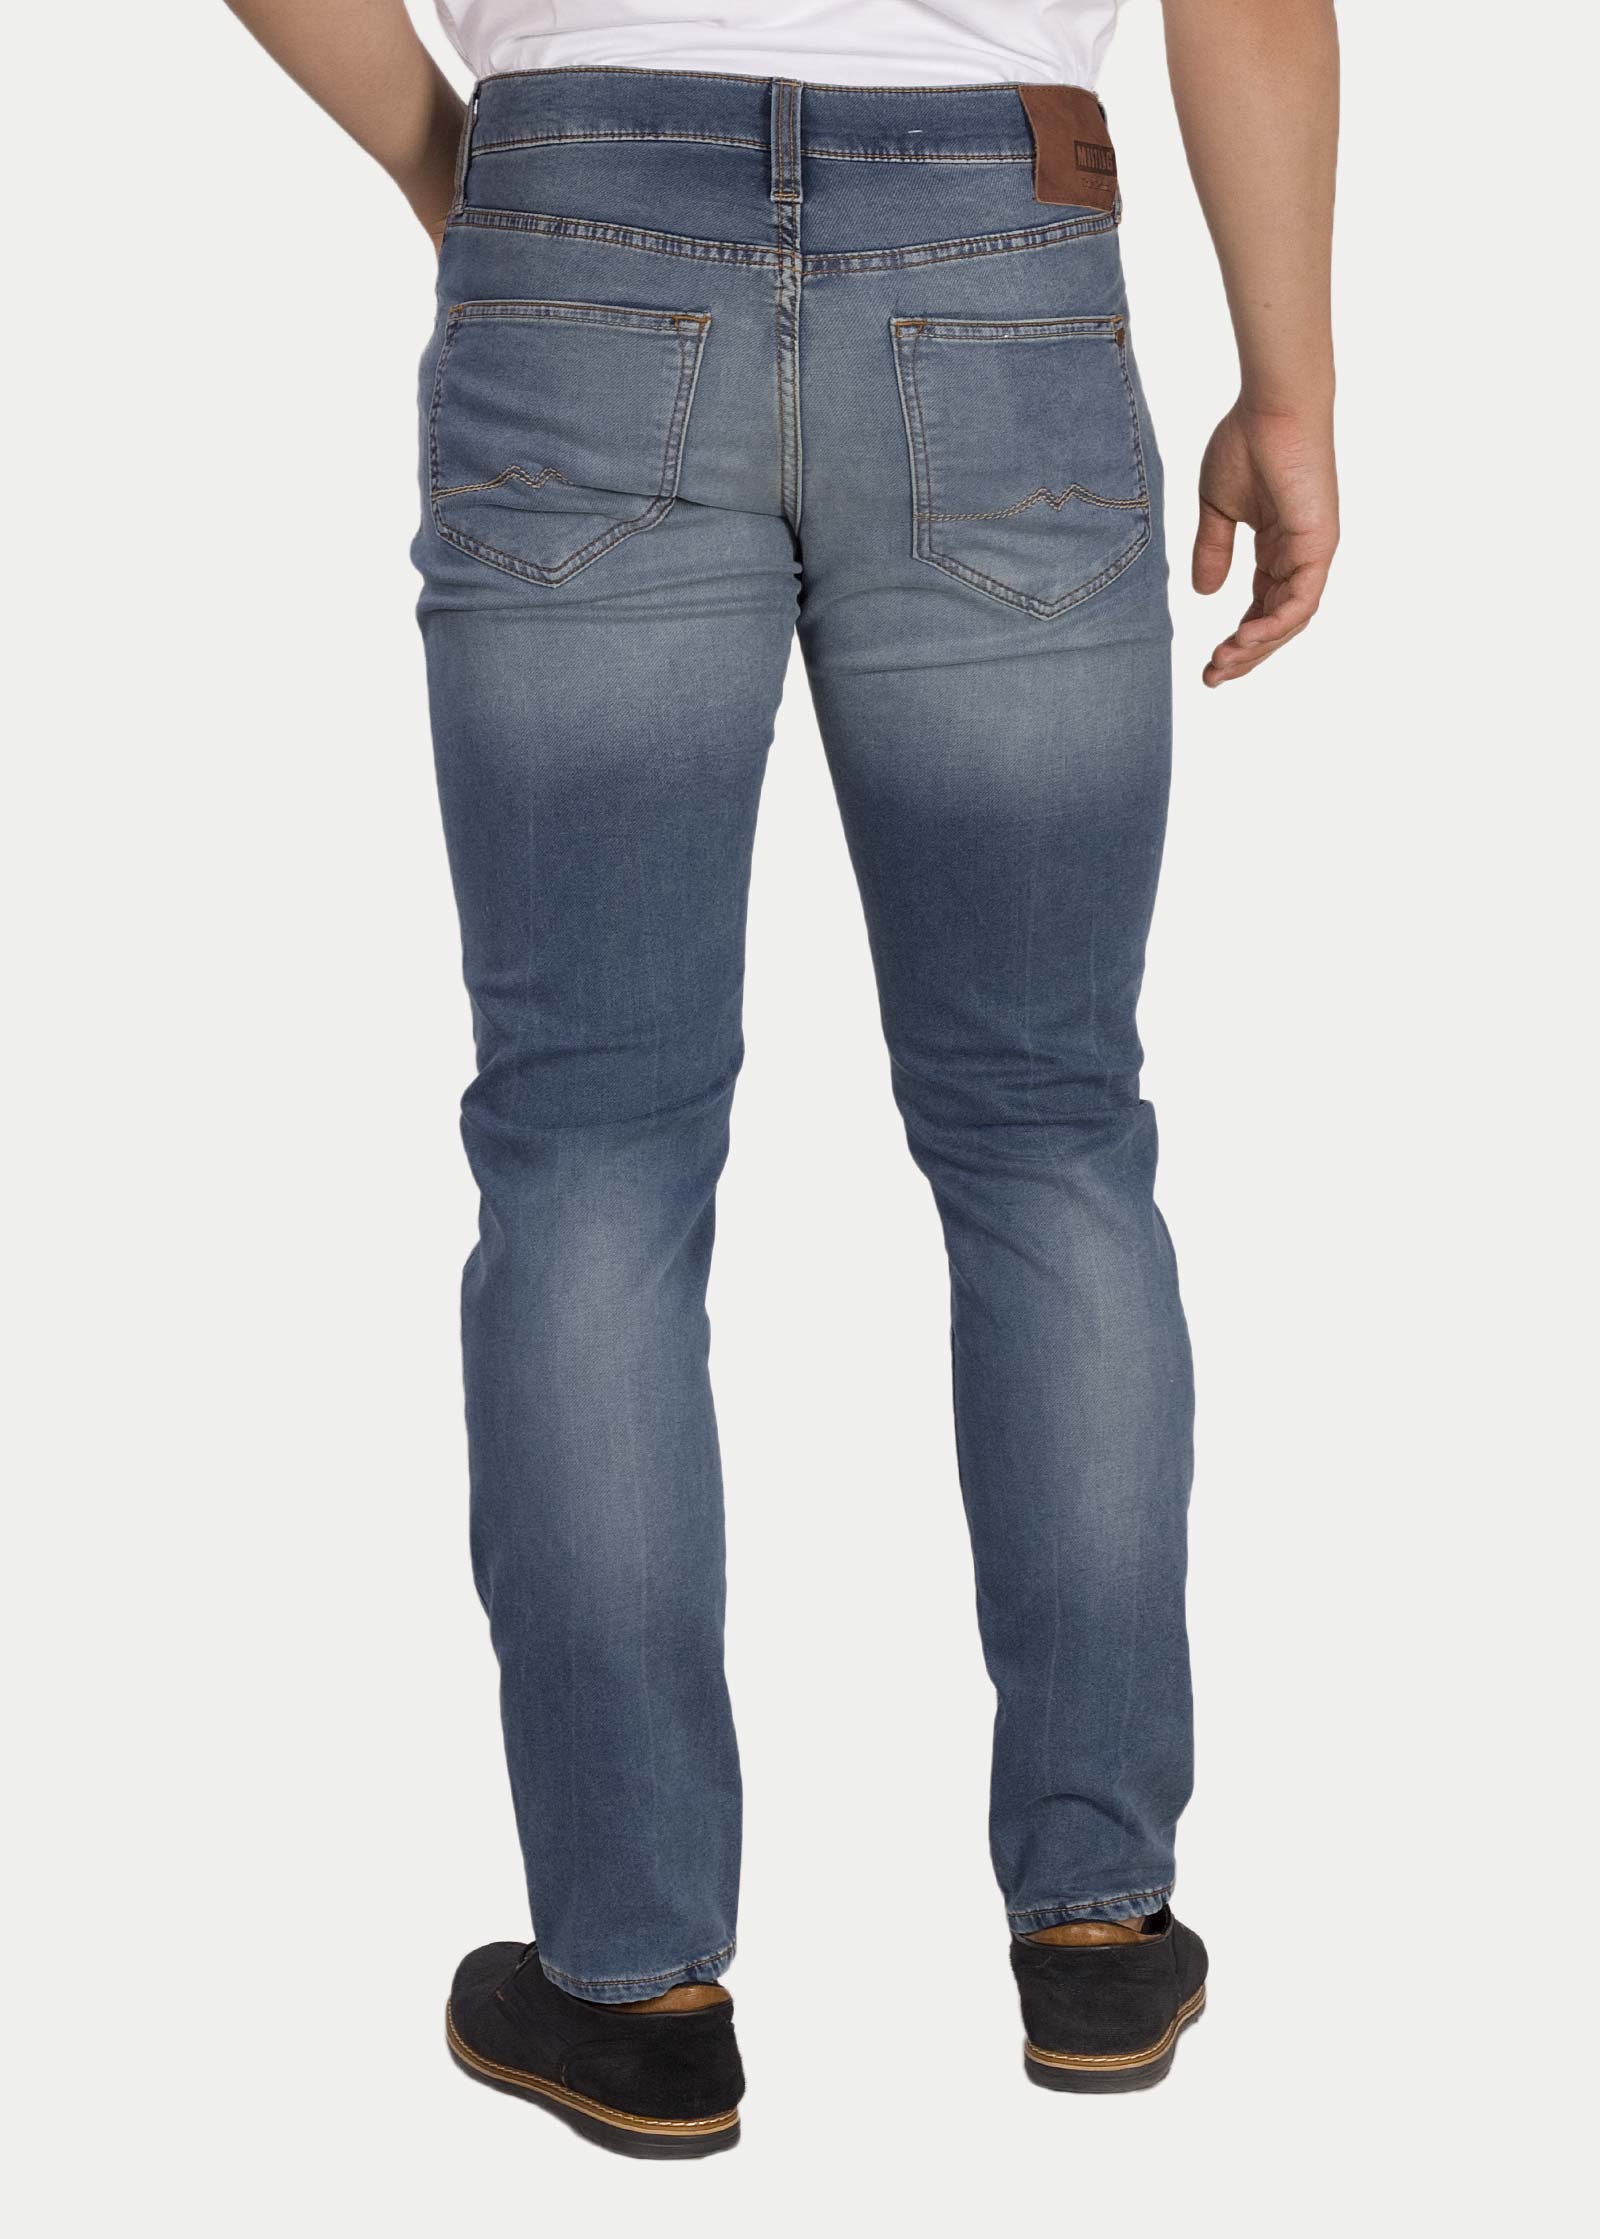 Jeans Oregon Tapered 3112/5455/536 Herrenausstatter Herren Kleidung Hosen & Jeans Jeans Tapered Jeans 